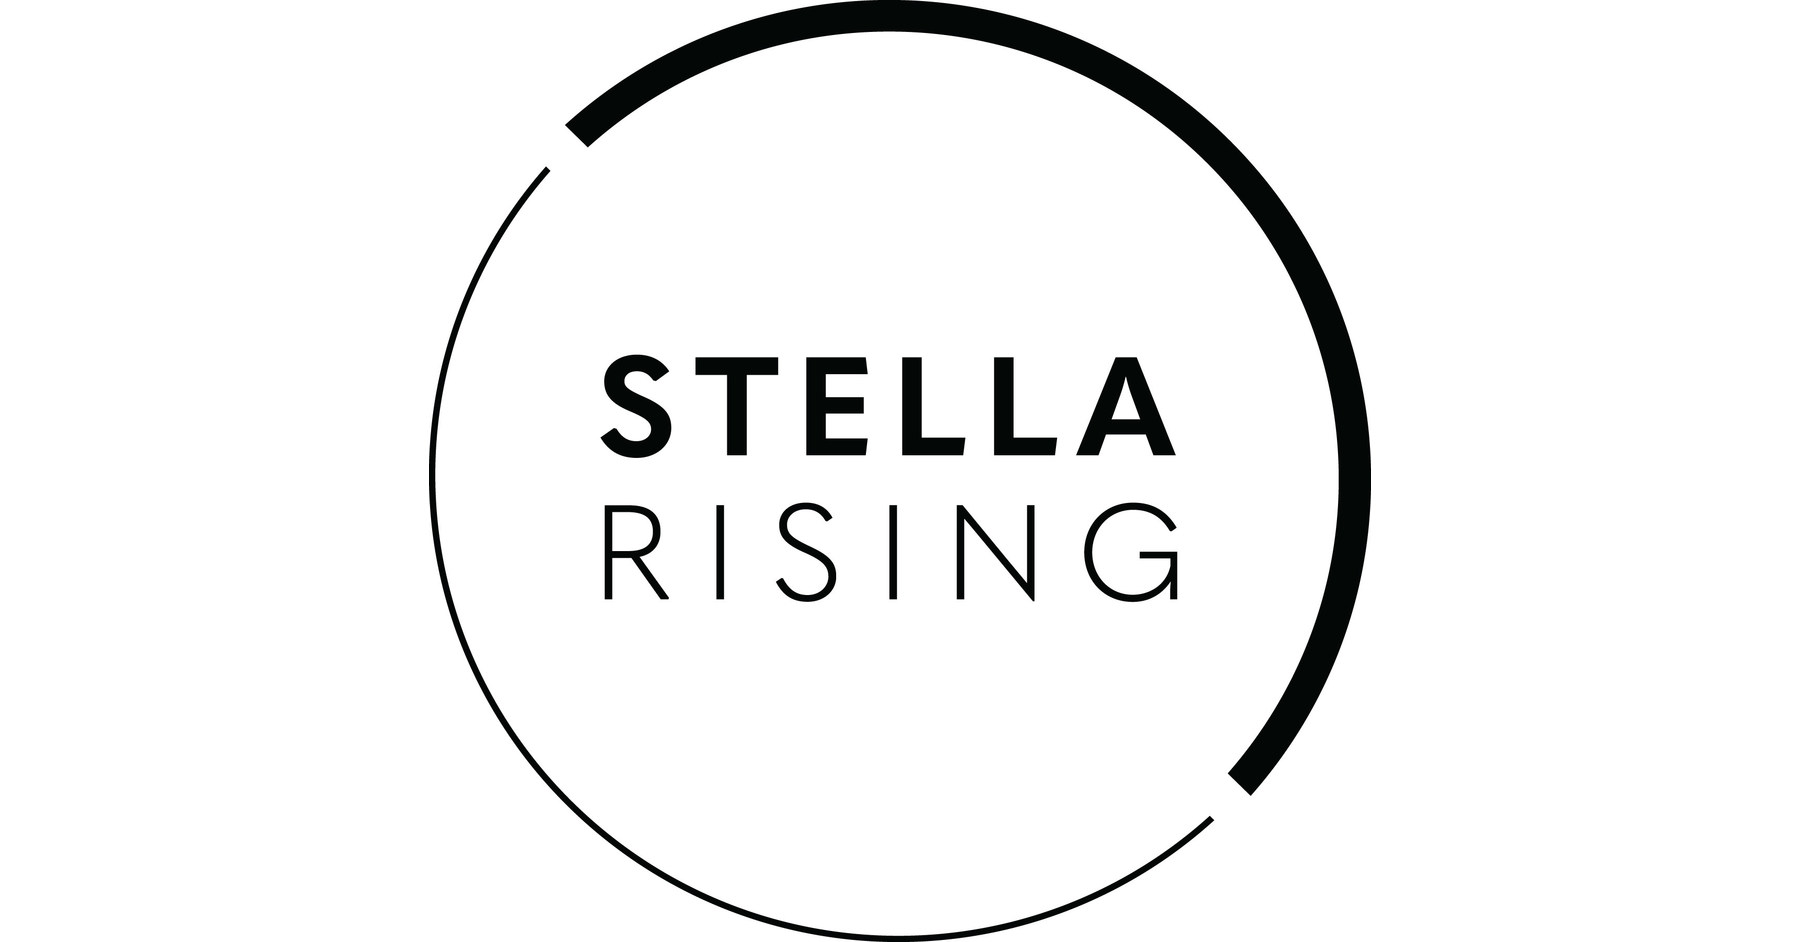 Stella rising logo